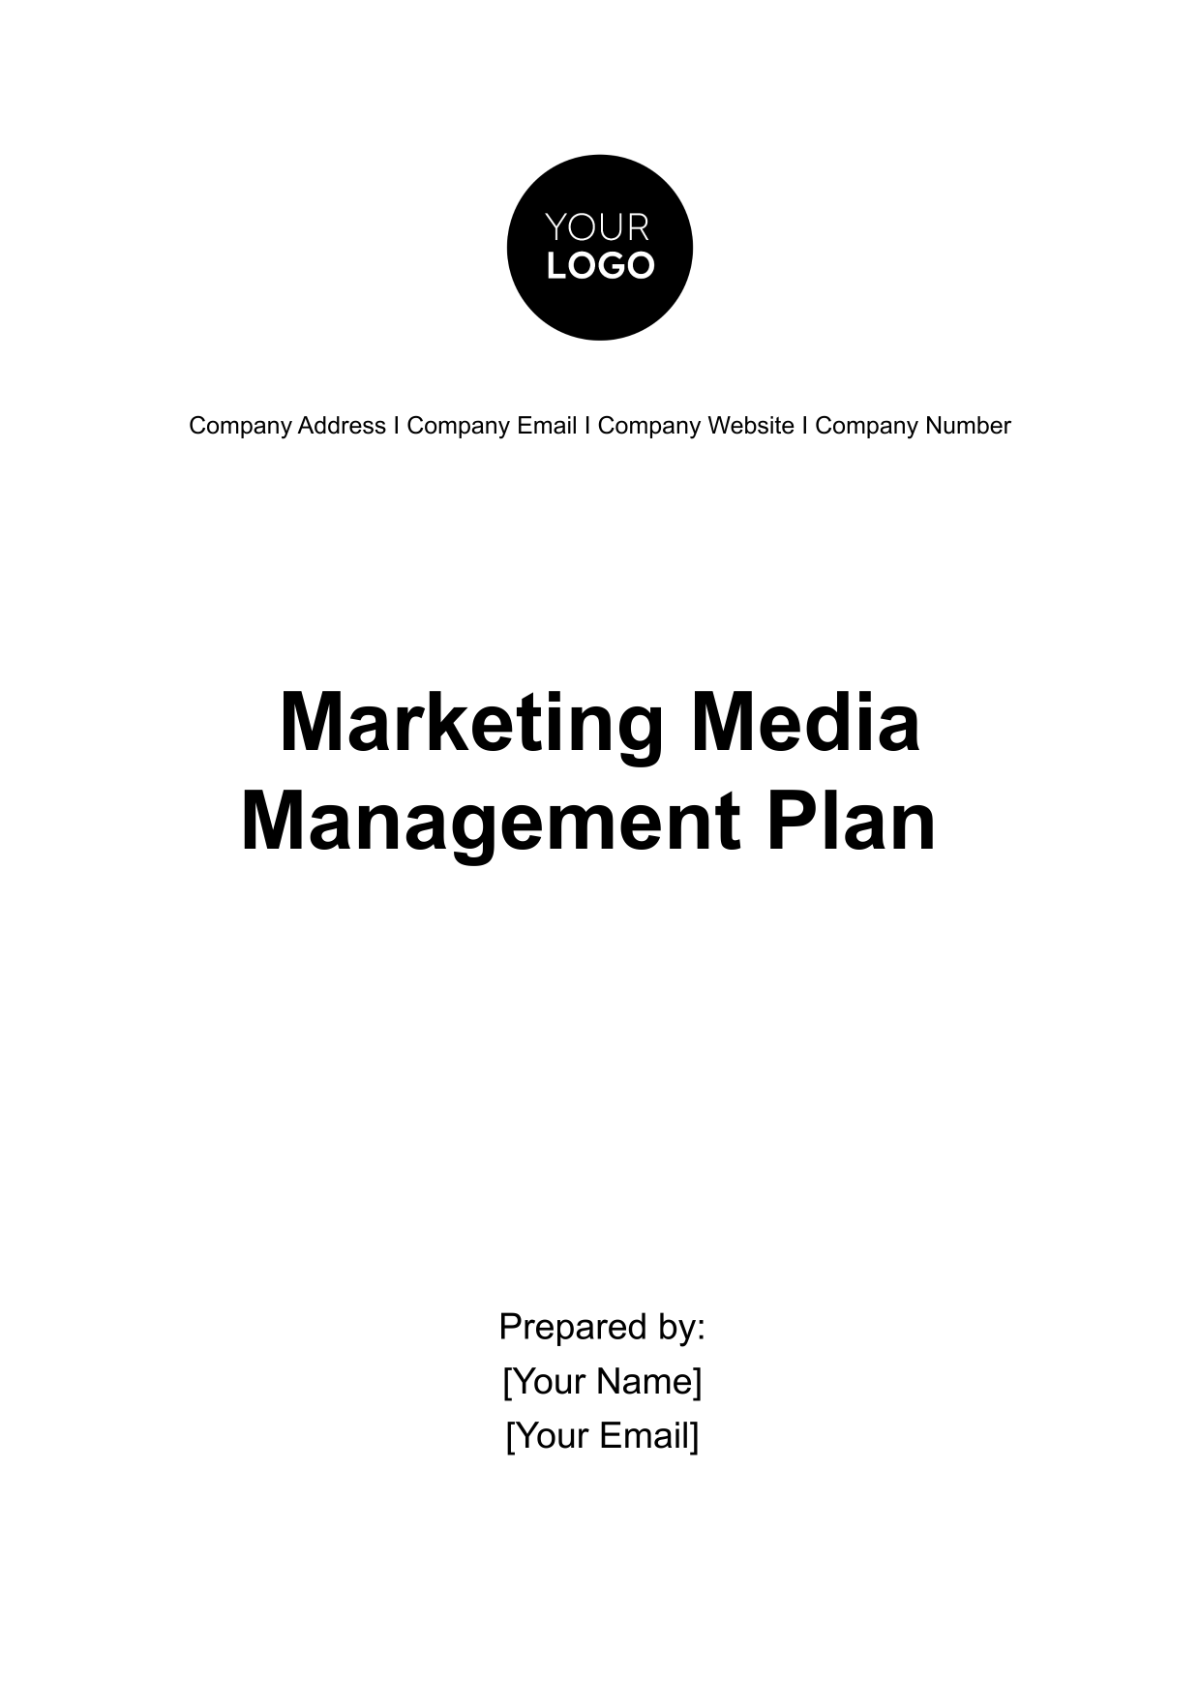 Marketing Media Management Plan Template